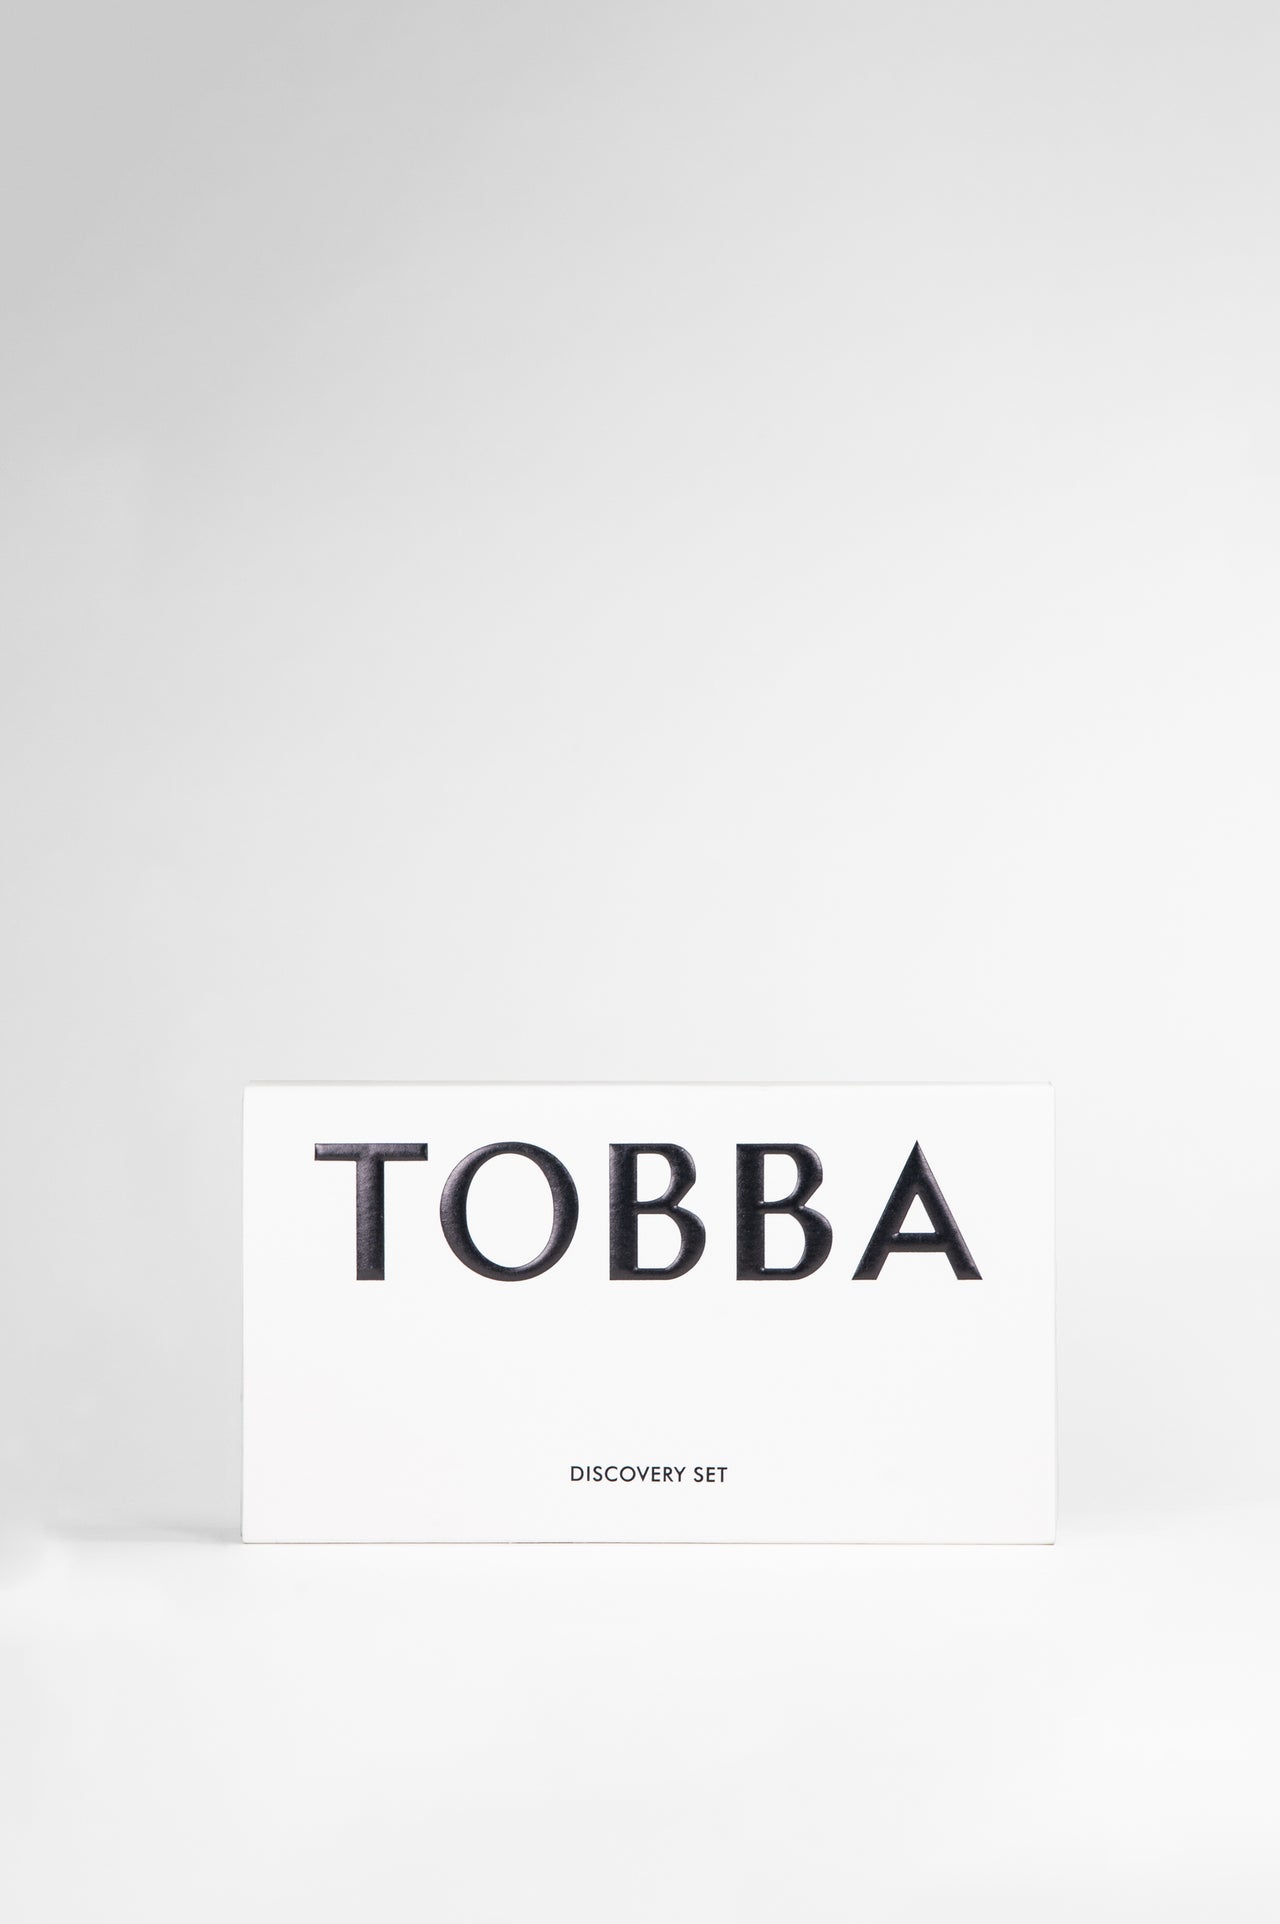 Tobba - Discovery Set